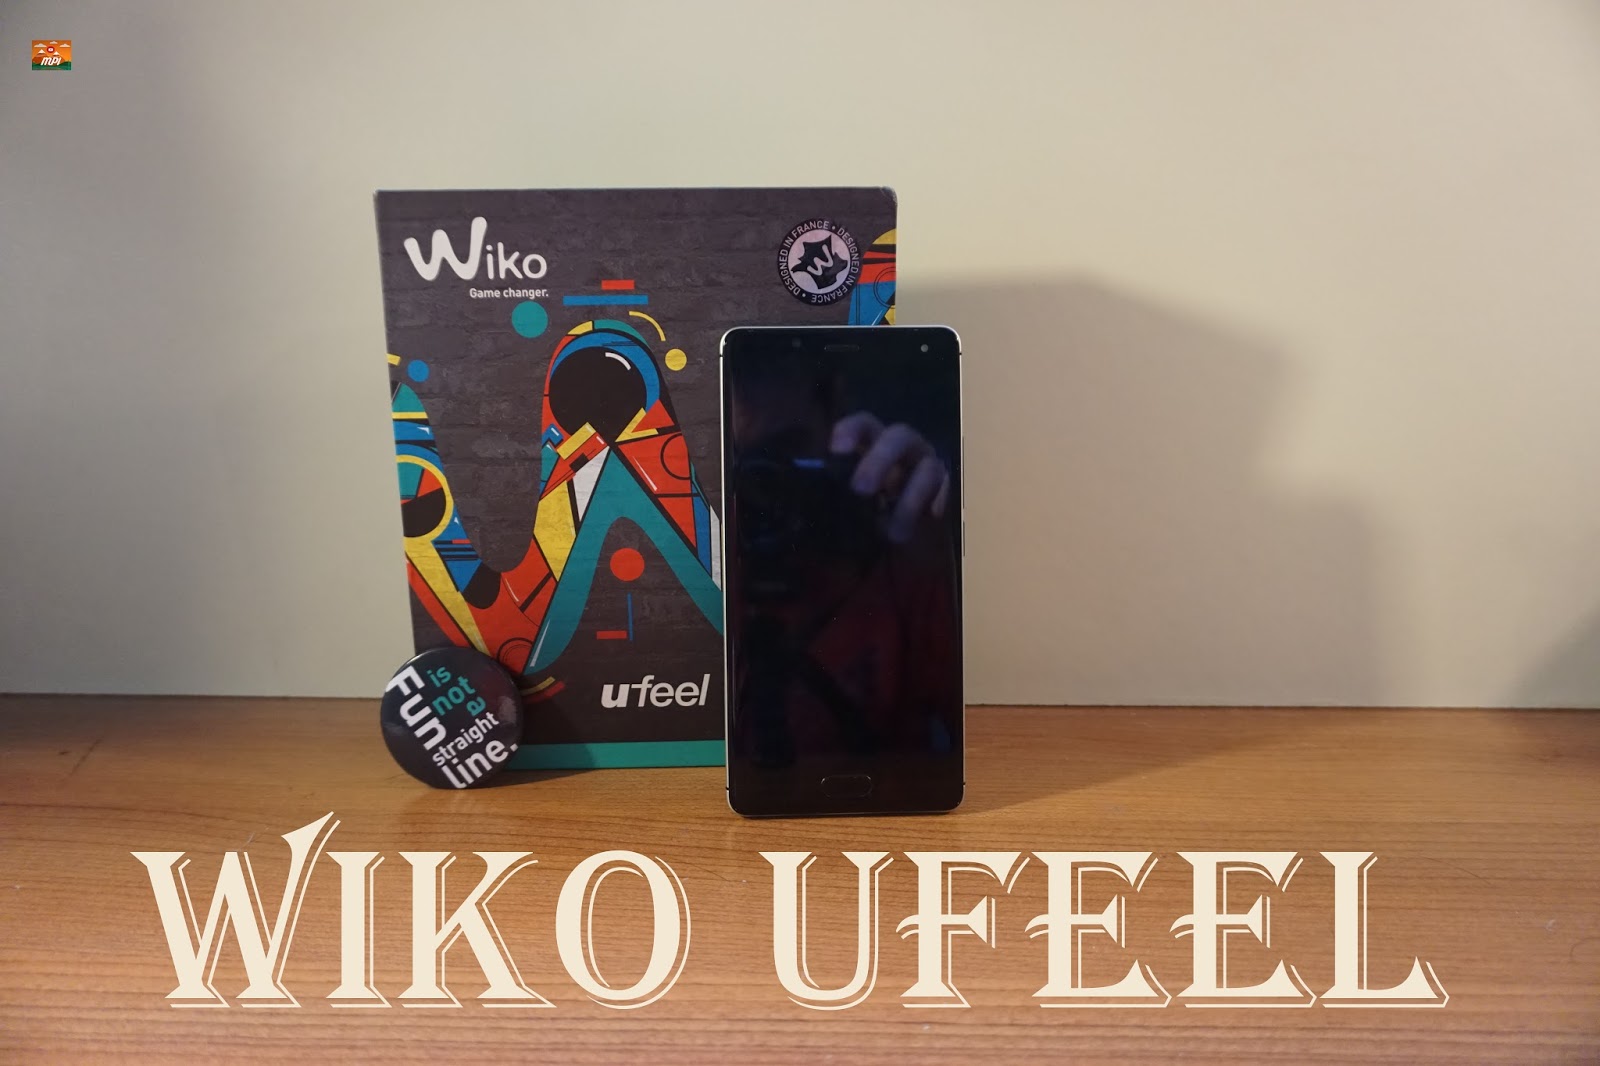 e725b wikoufeelcop - Wiko Ufeel recensione